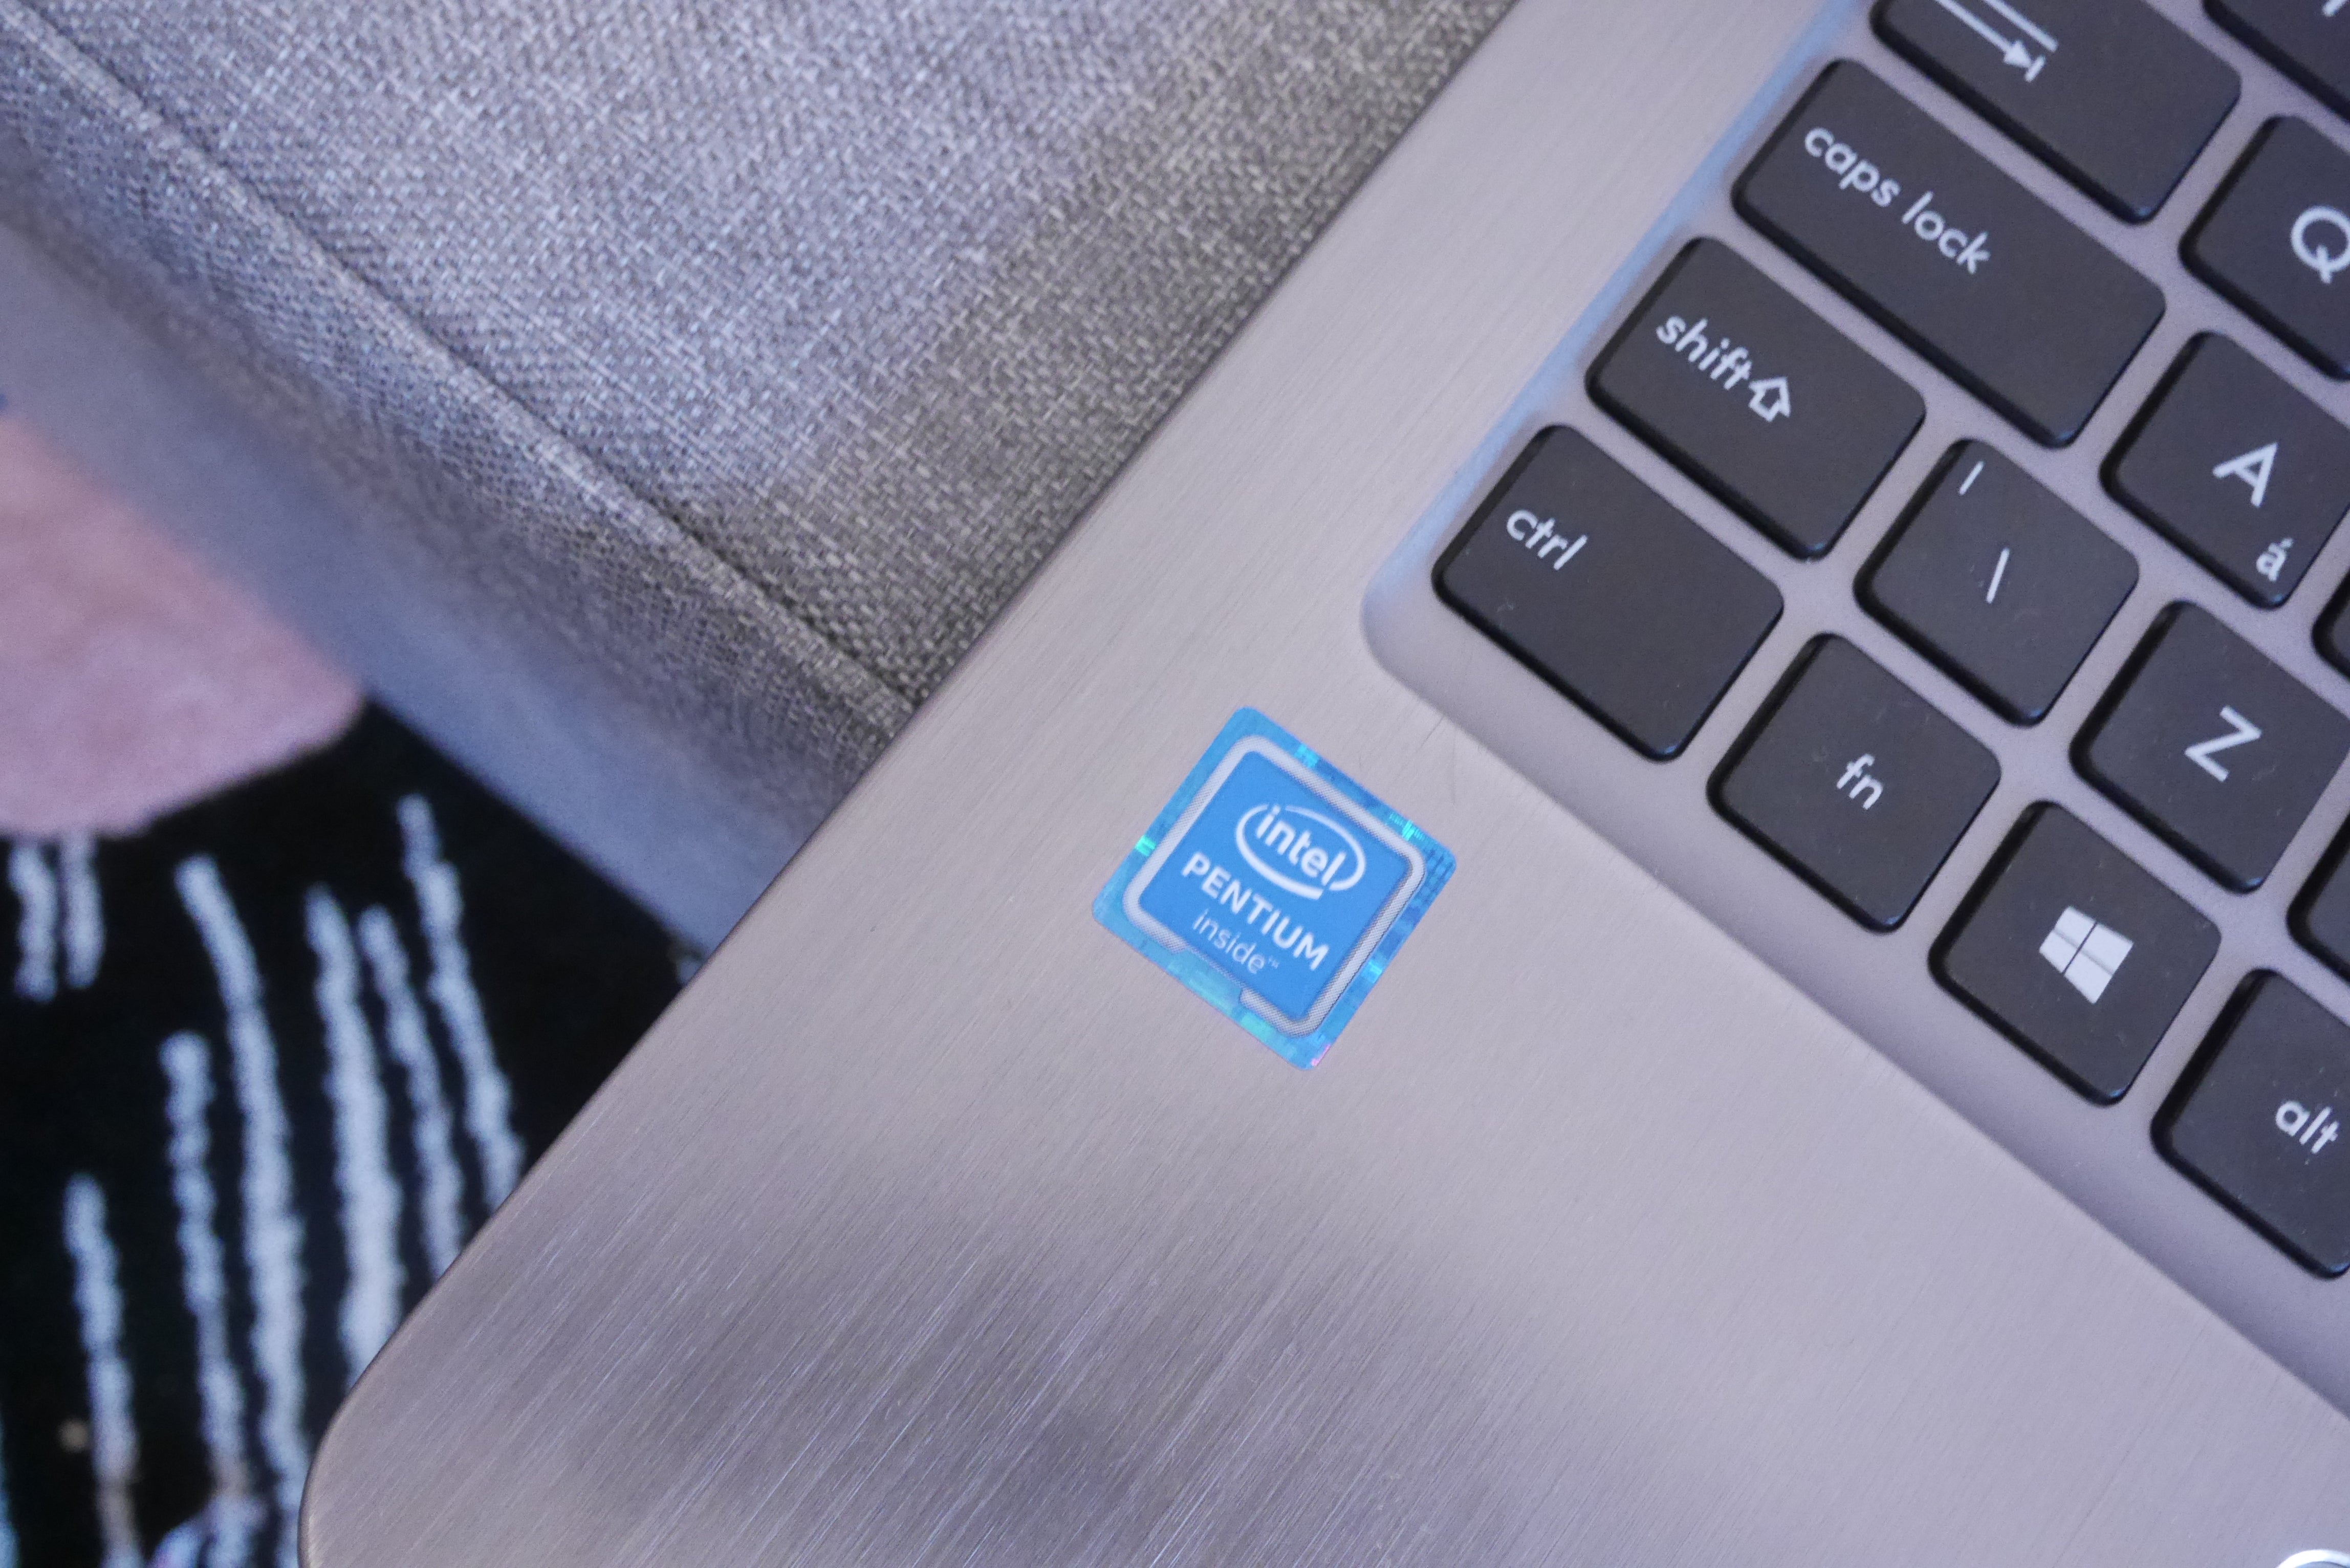 Close-up of Asus laptop with Intel Pentium sticker.